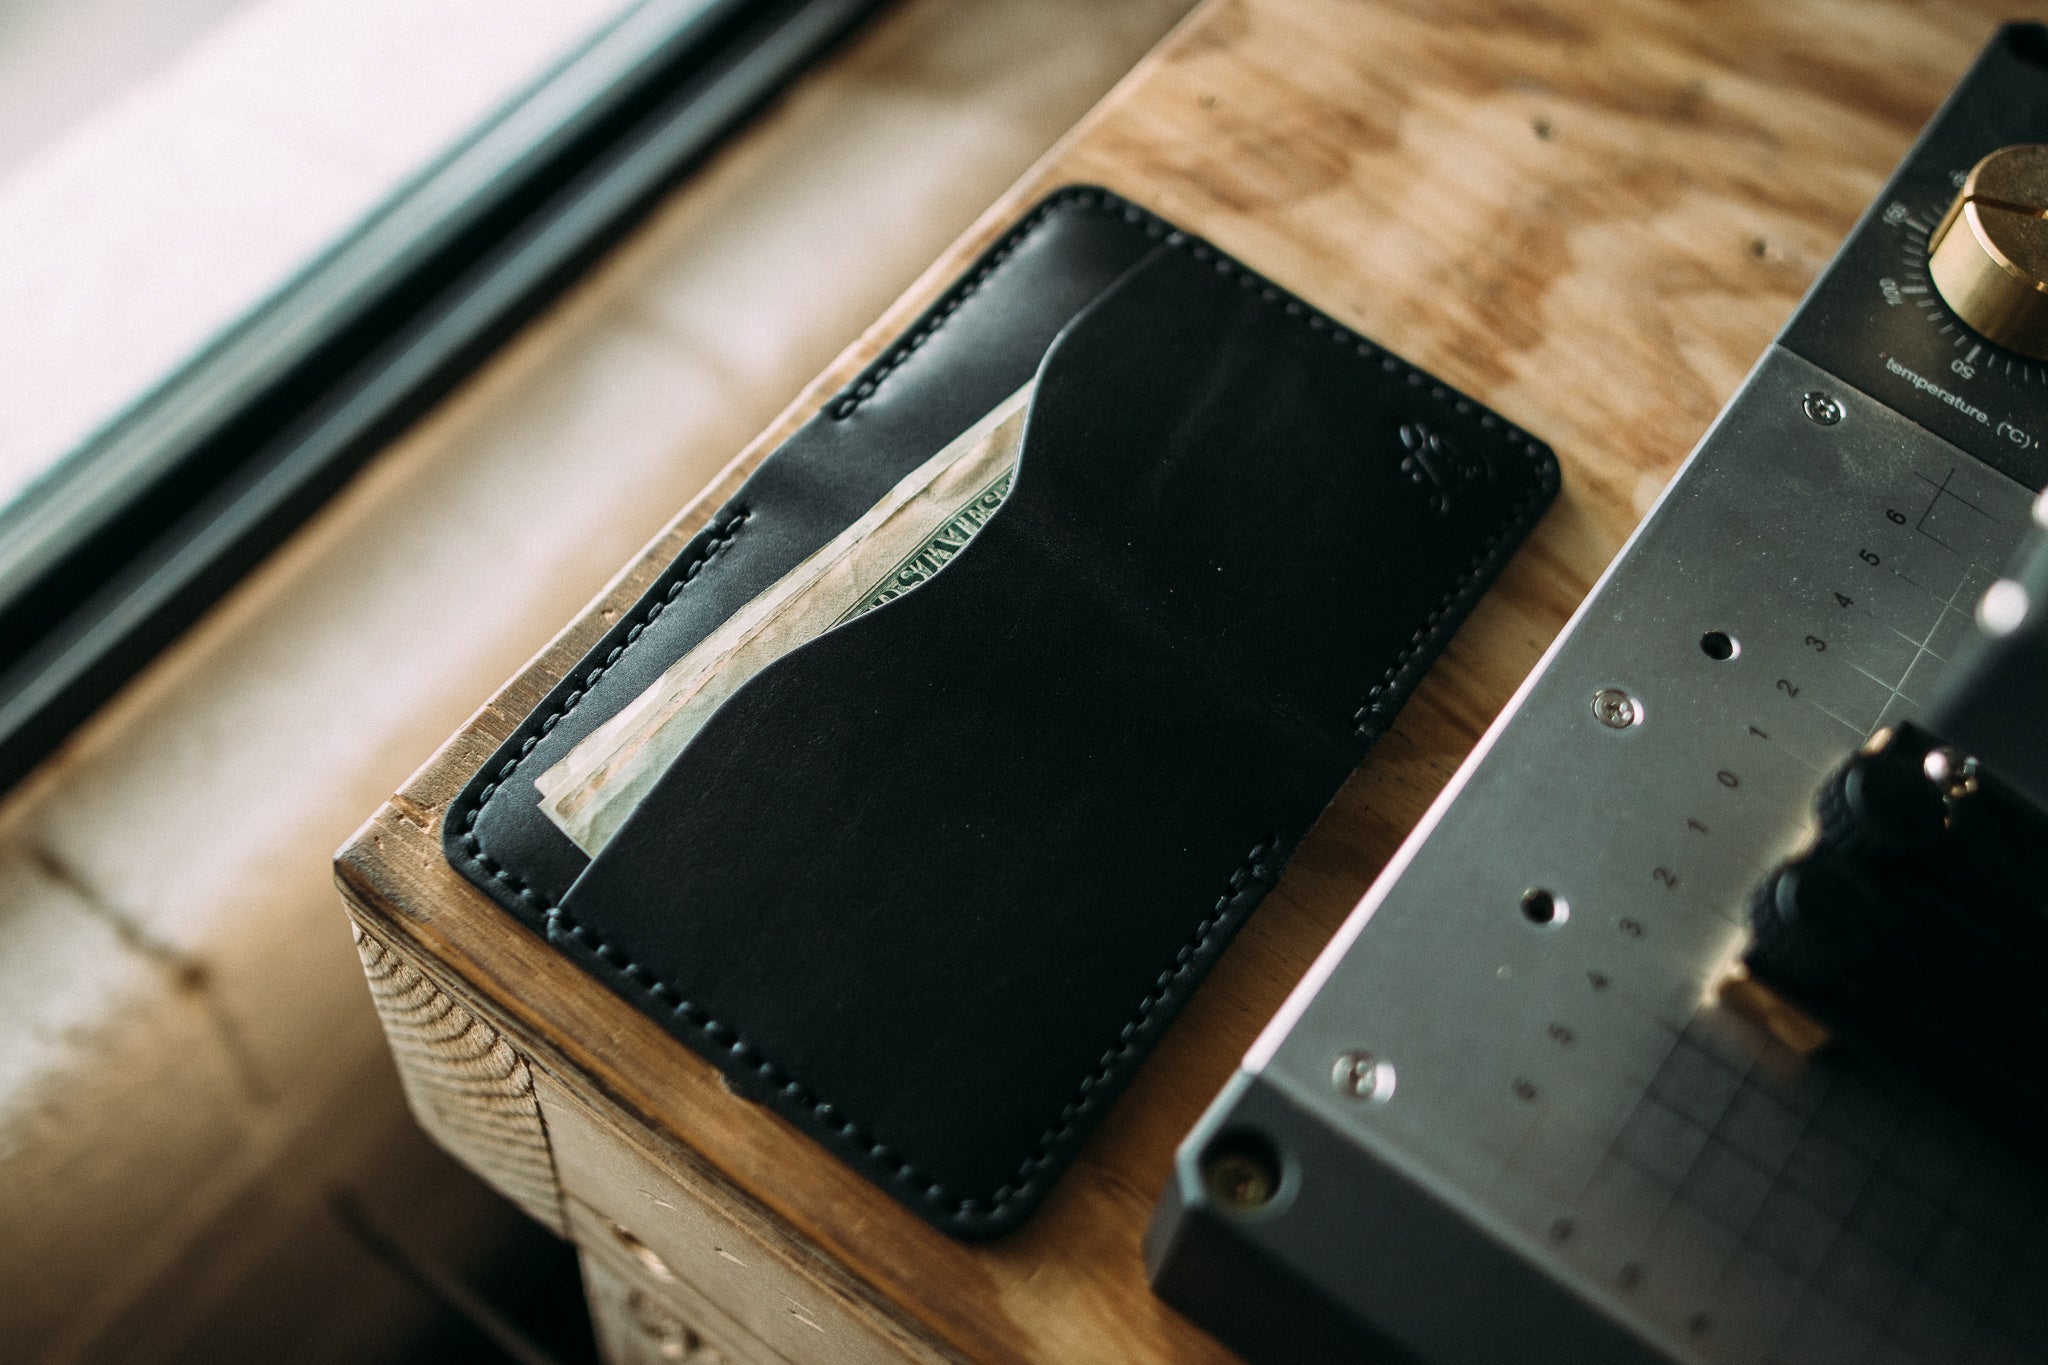 Bifold black wallet, Handmade Italian leather wallet, Highest quality